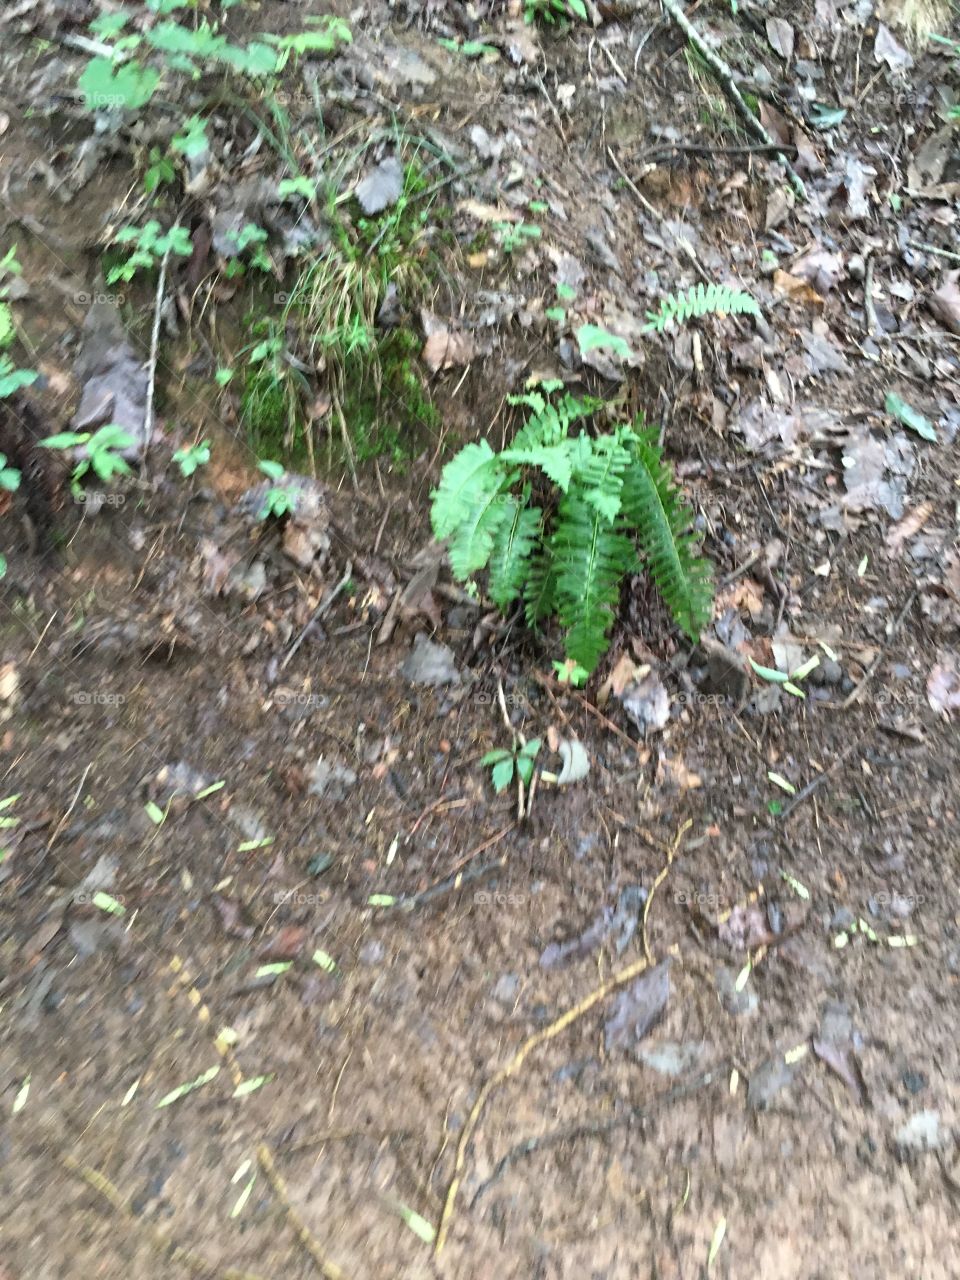 Where the fern grows